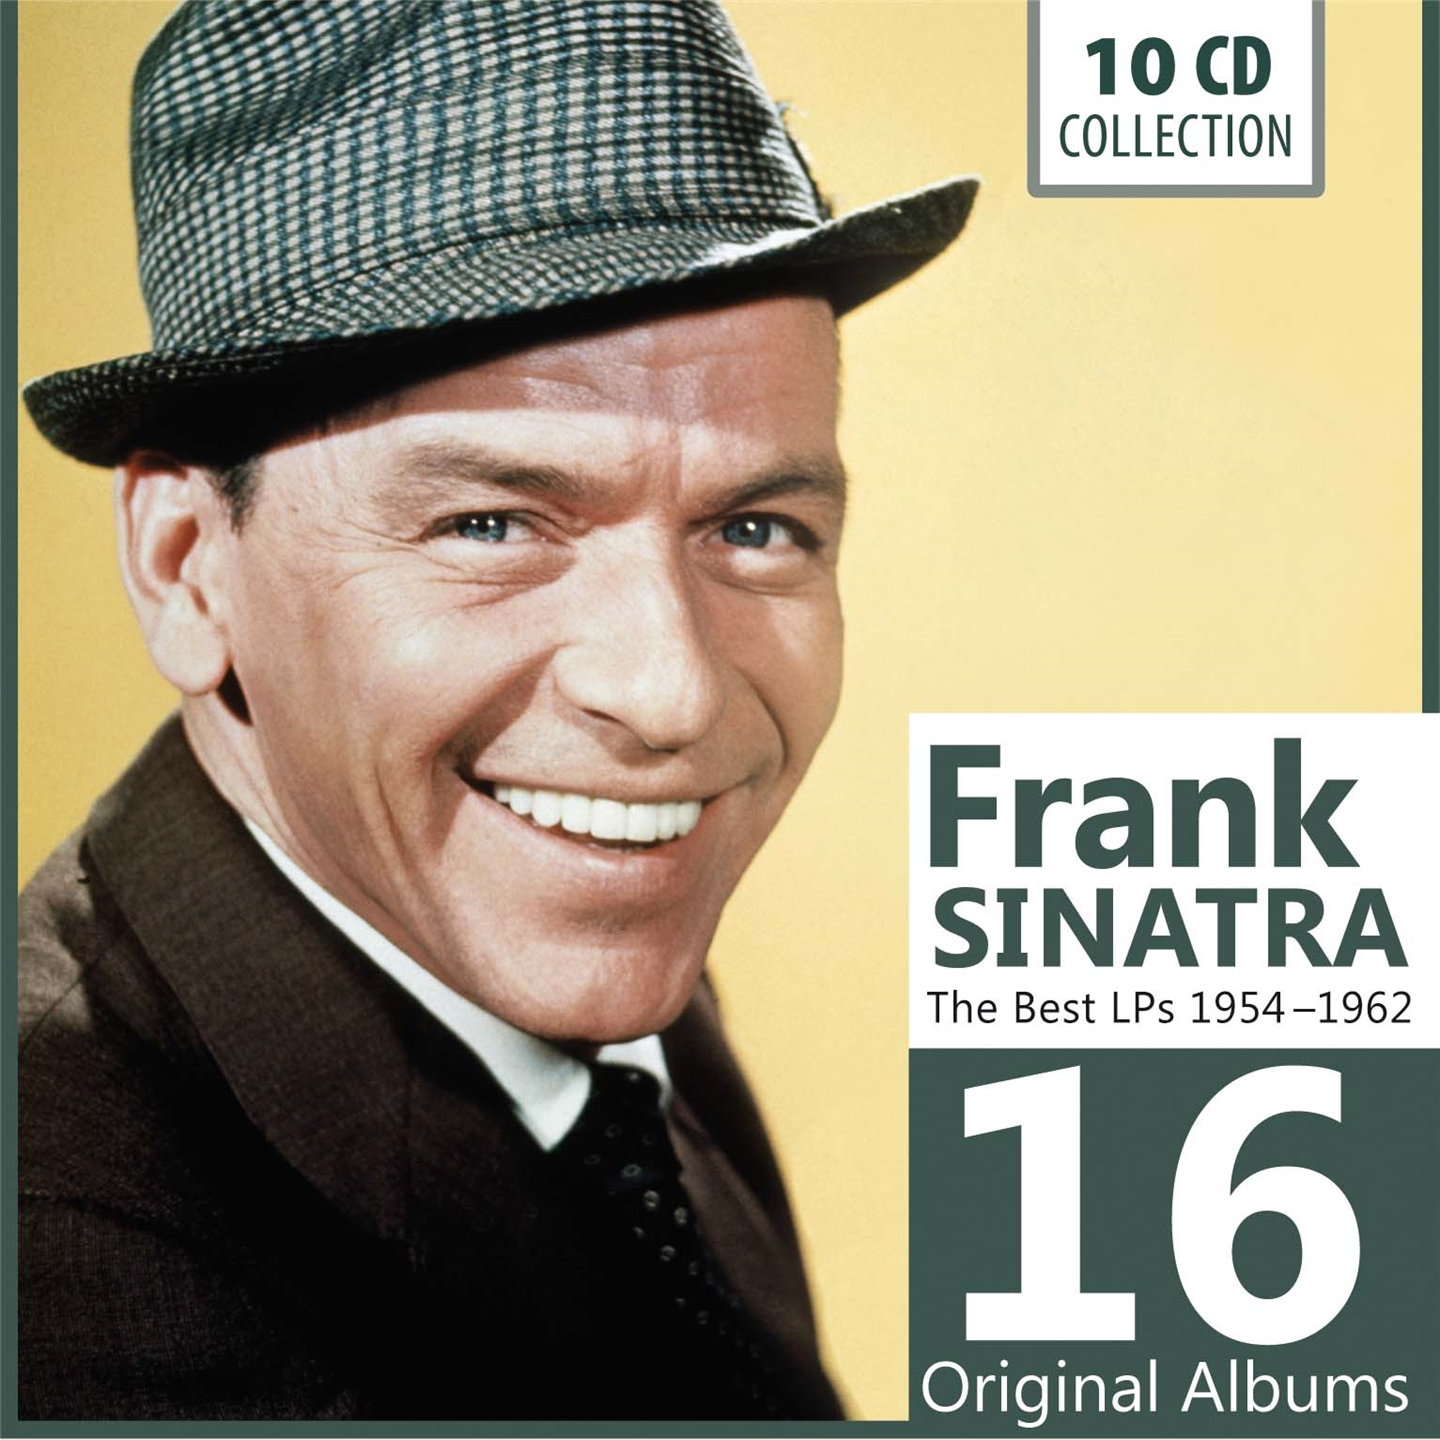 THE BEST LPS 1954-1962 (16 ORIGINAL ALBUMS)